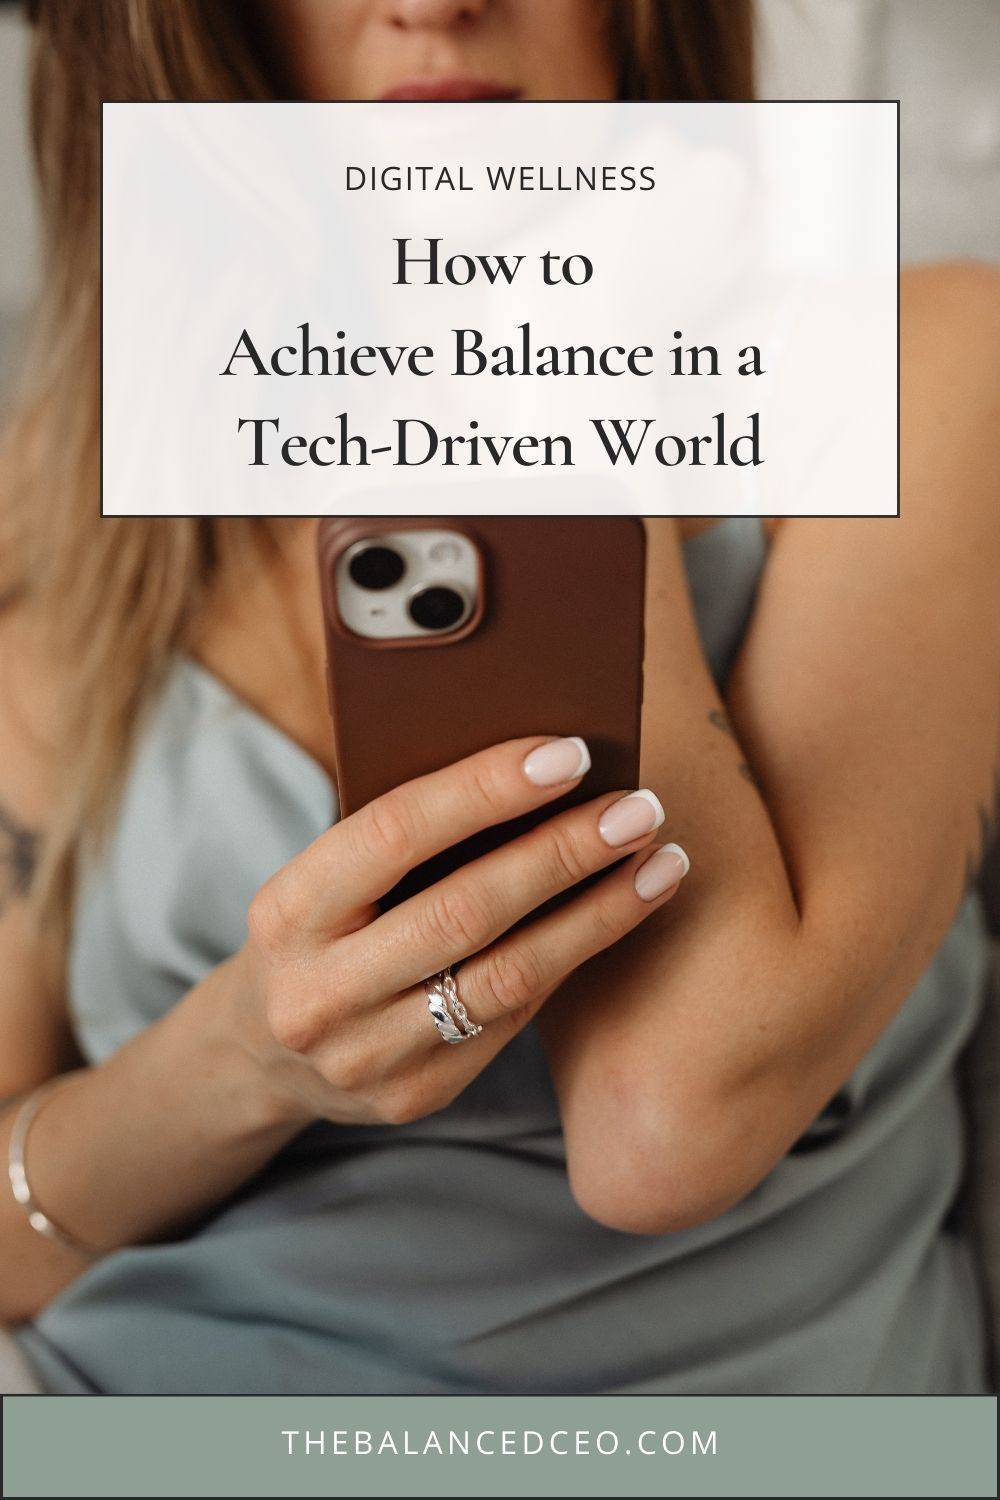 Digital Wellness: How to Achieve Balance in a Tech-Driven World